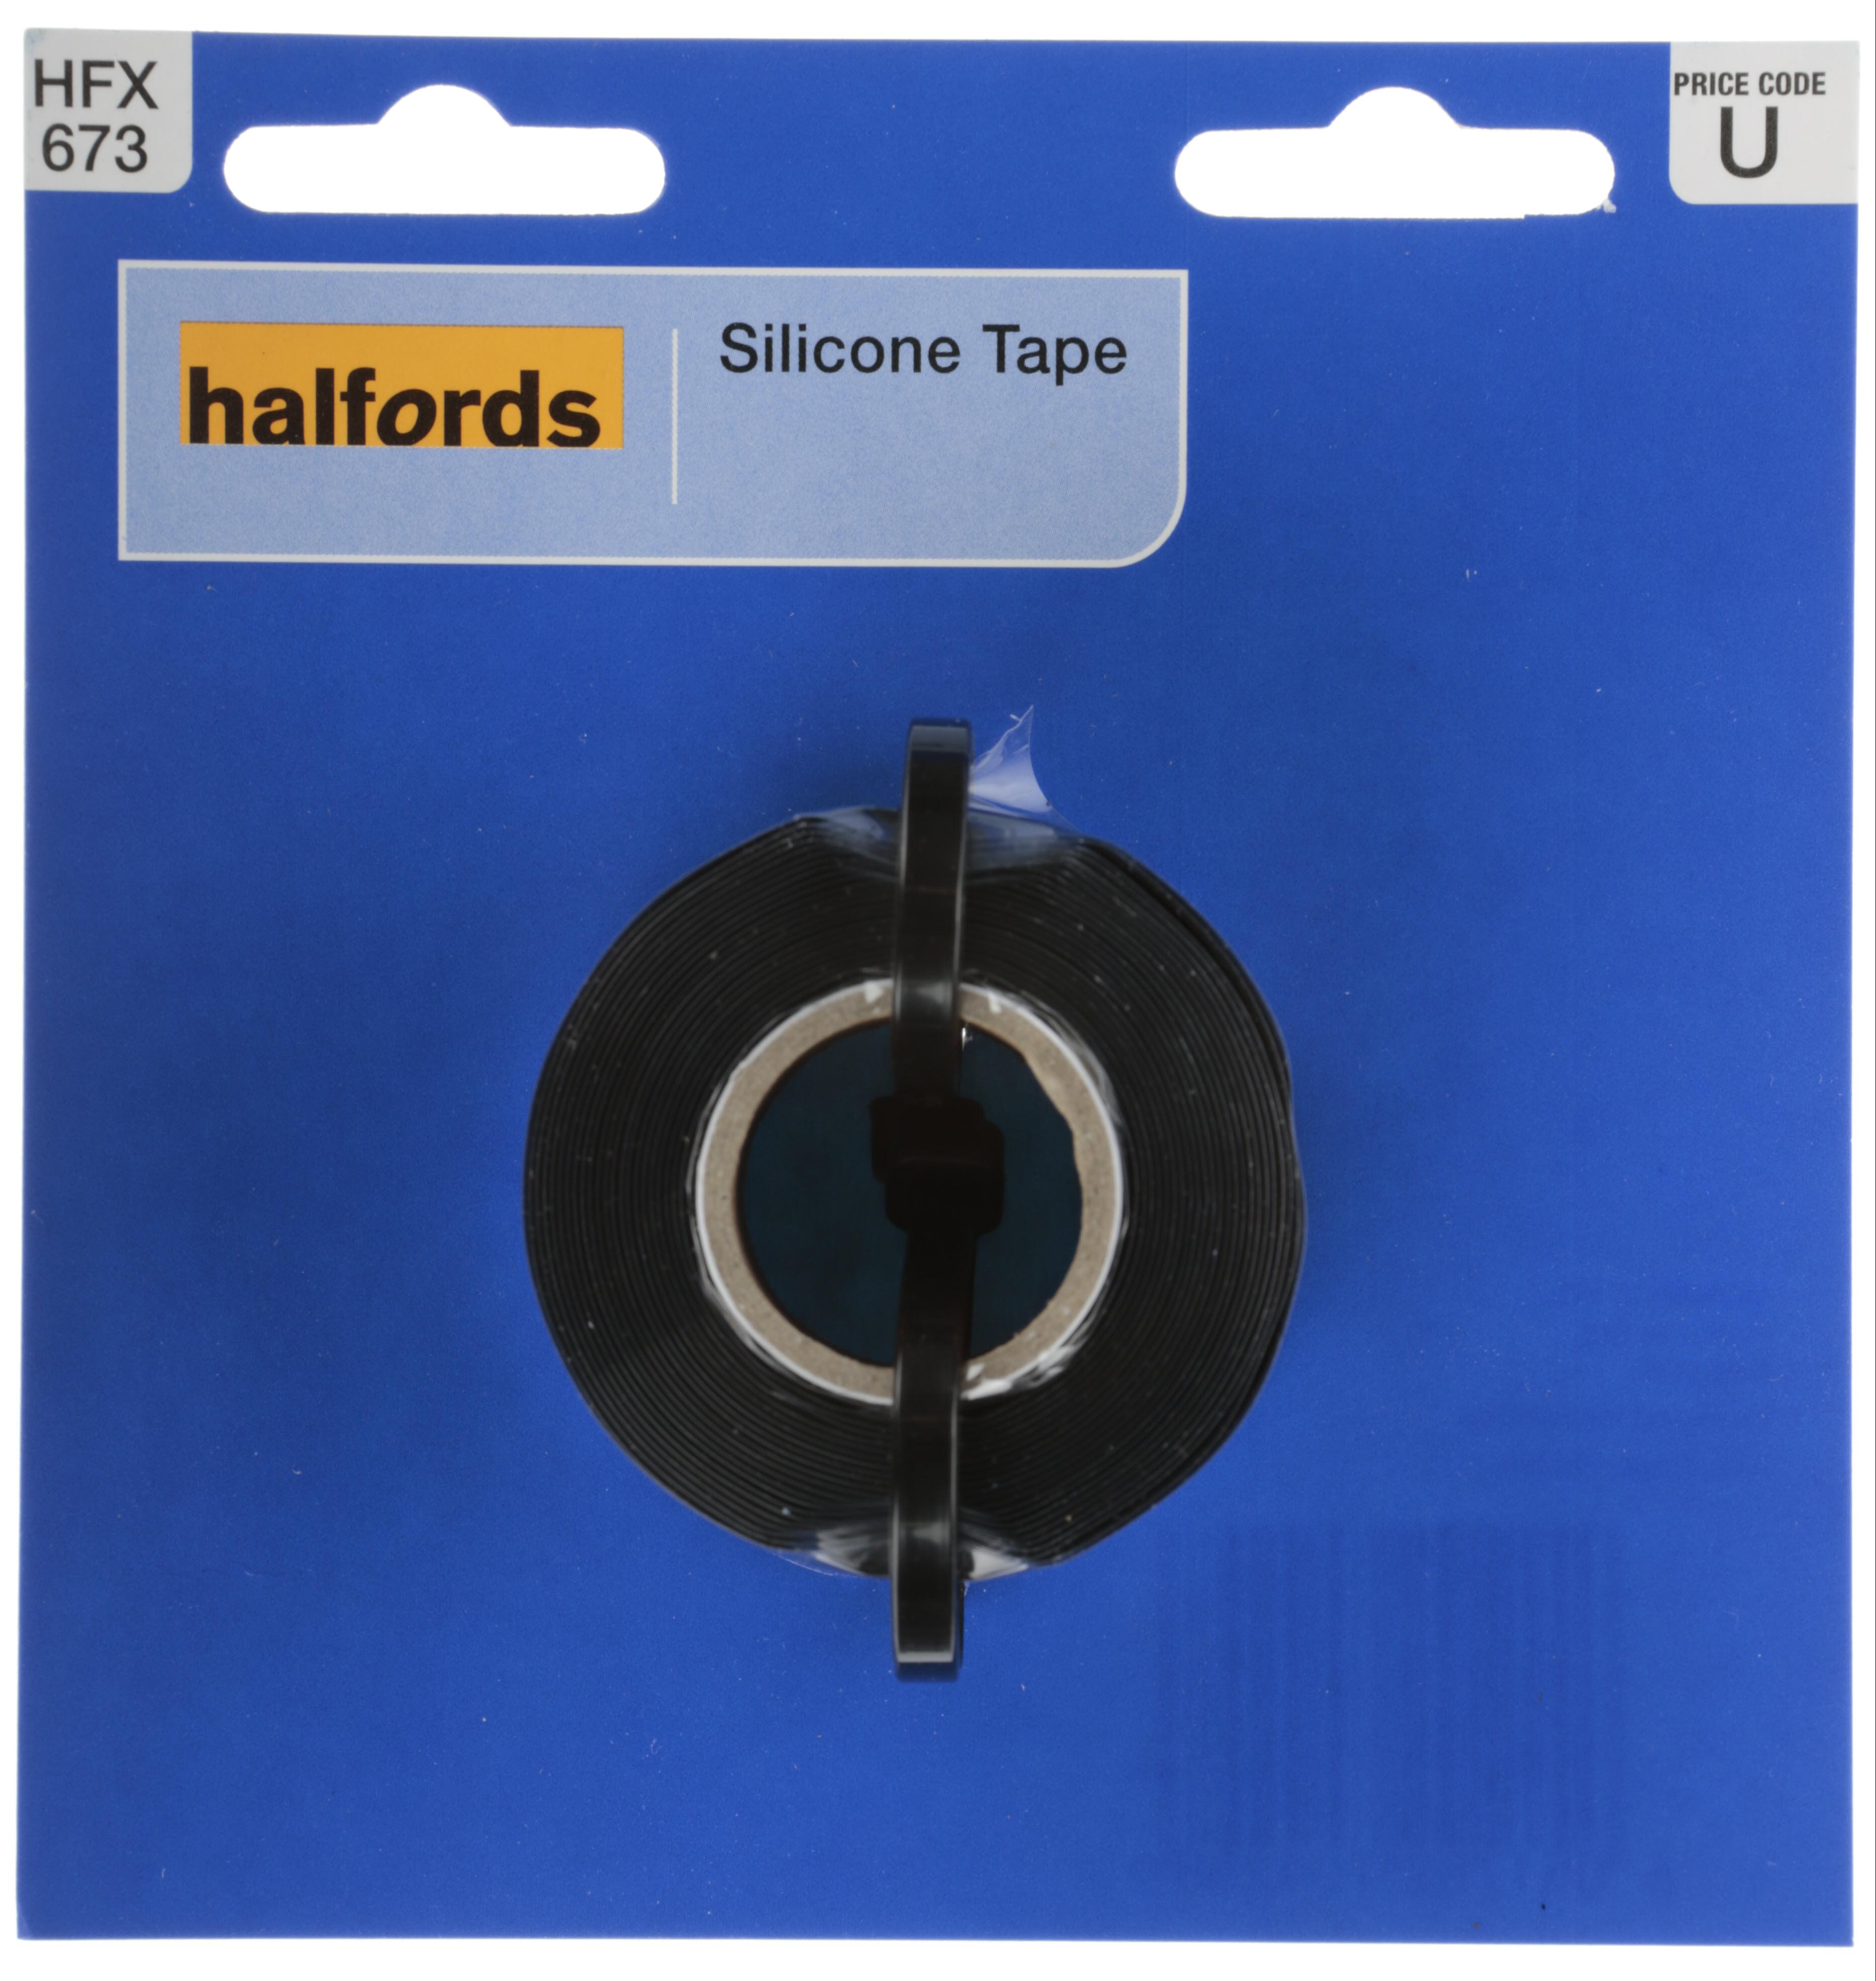 Halfords Silicone Tape Black. (Hfx673)